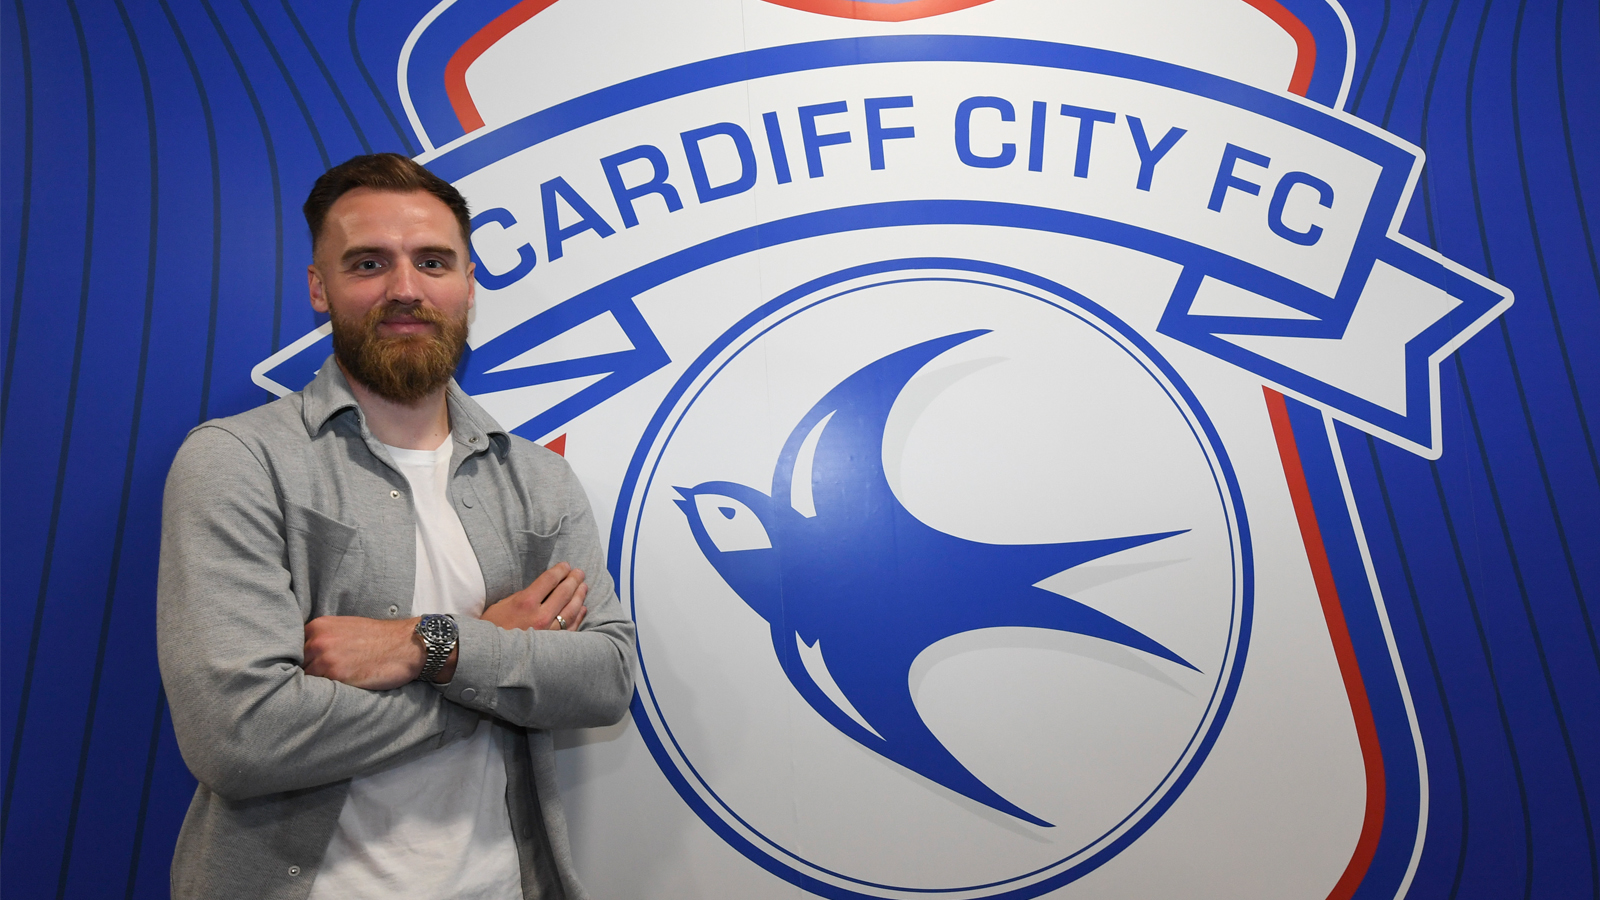 Welcome to Cardiff City, Jak Alnwick...